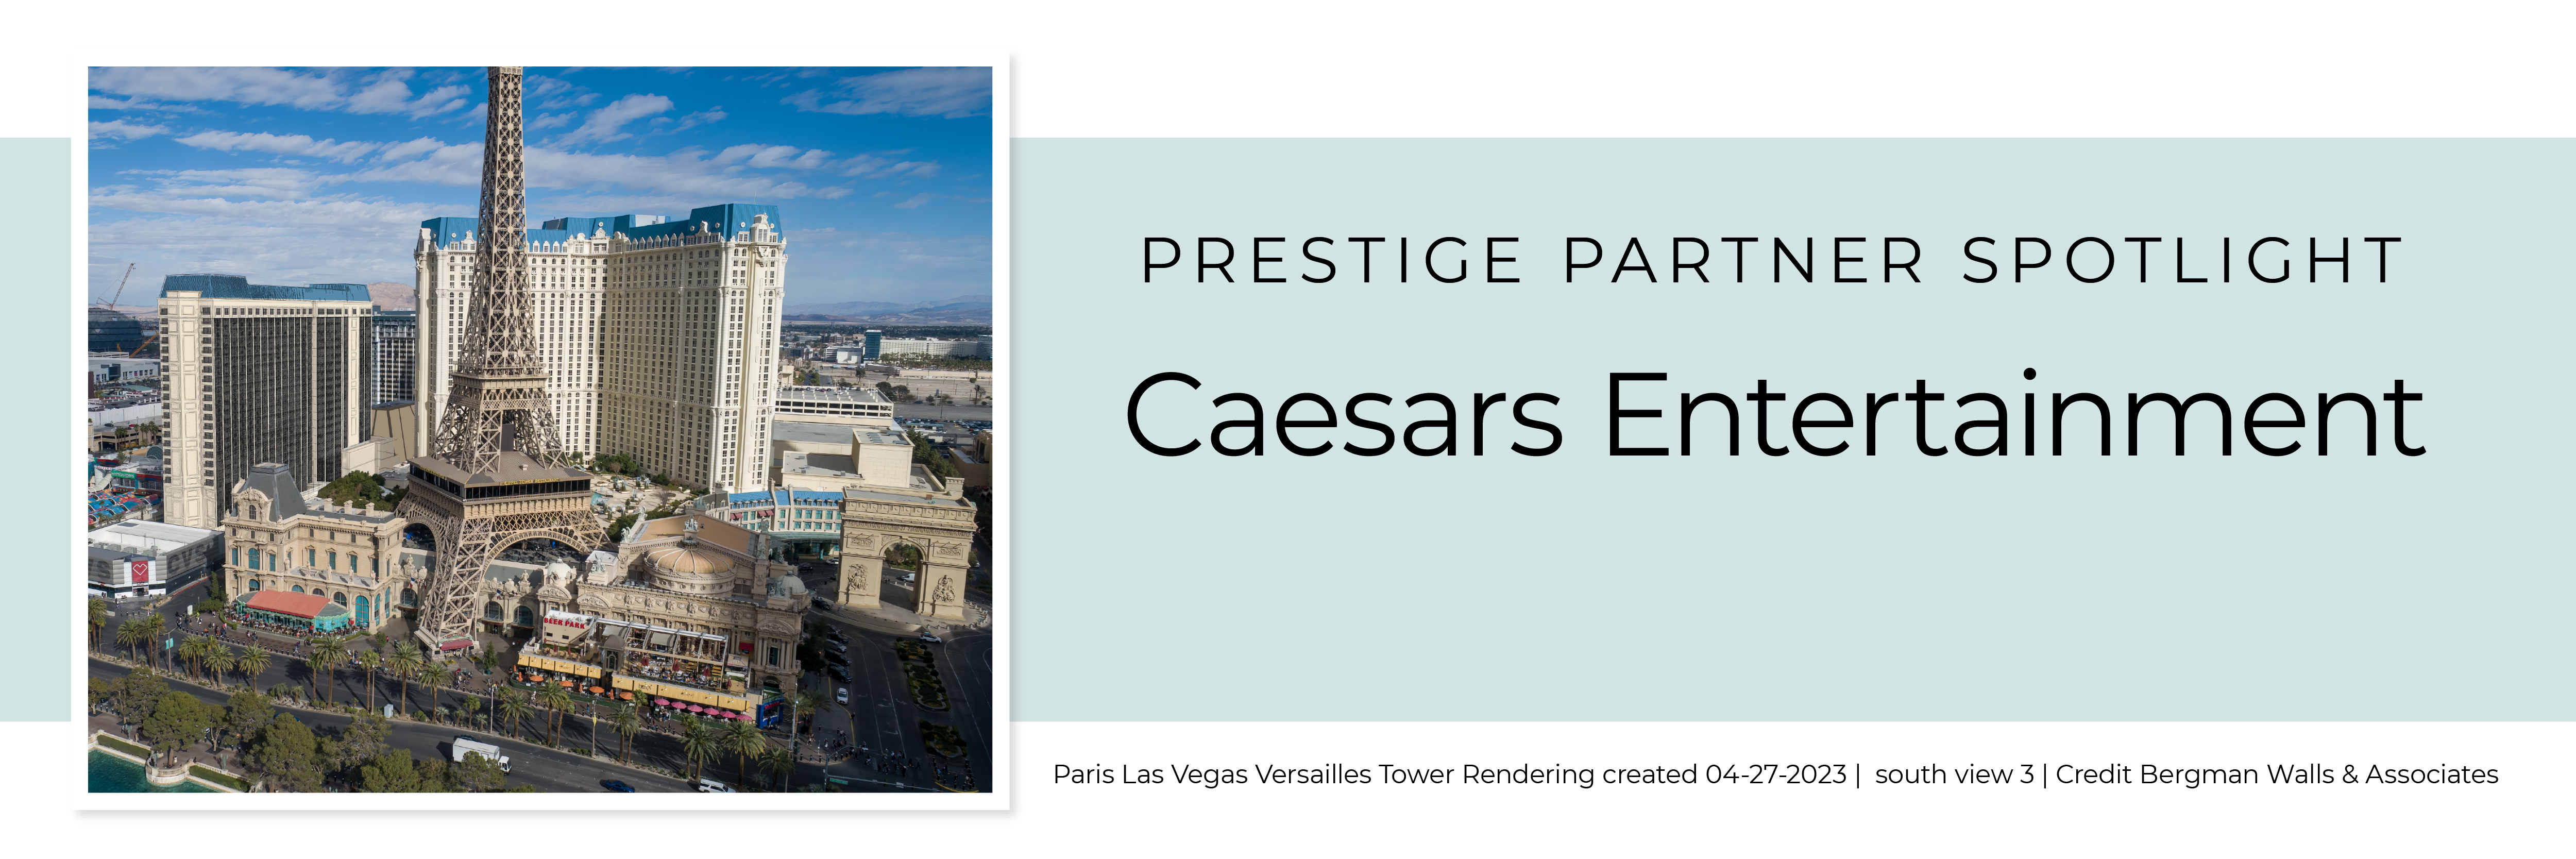 Las Vegas Horseshoe's Jubilee Tower to Become Part of Paris Las